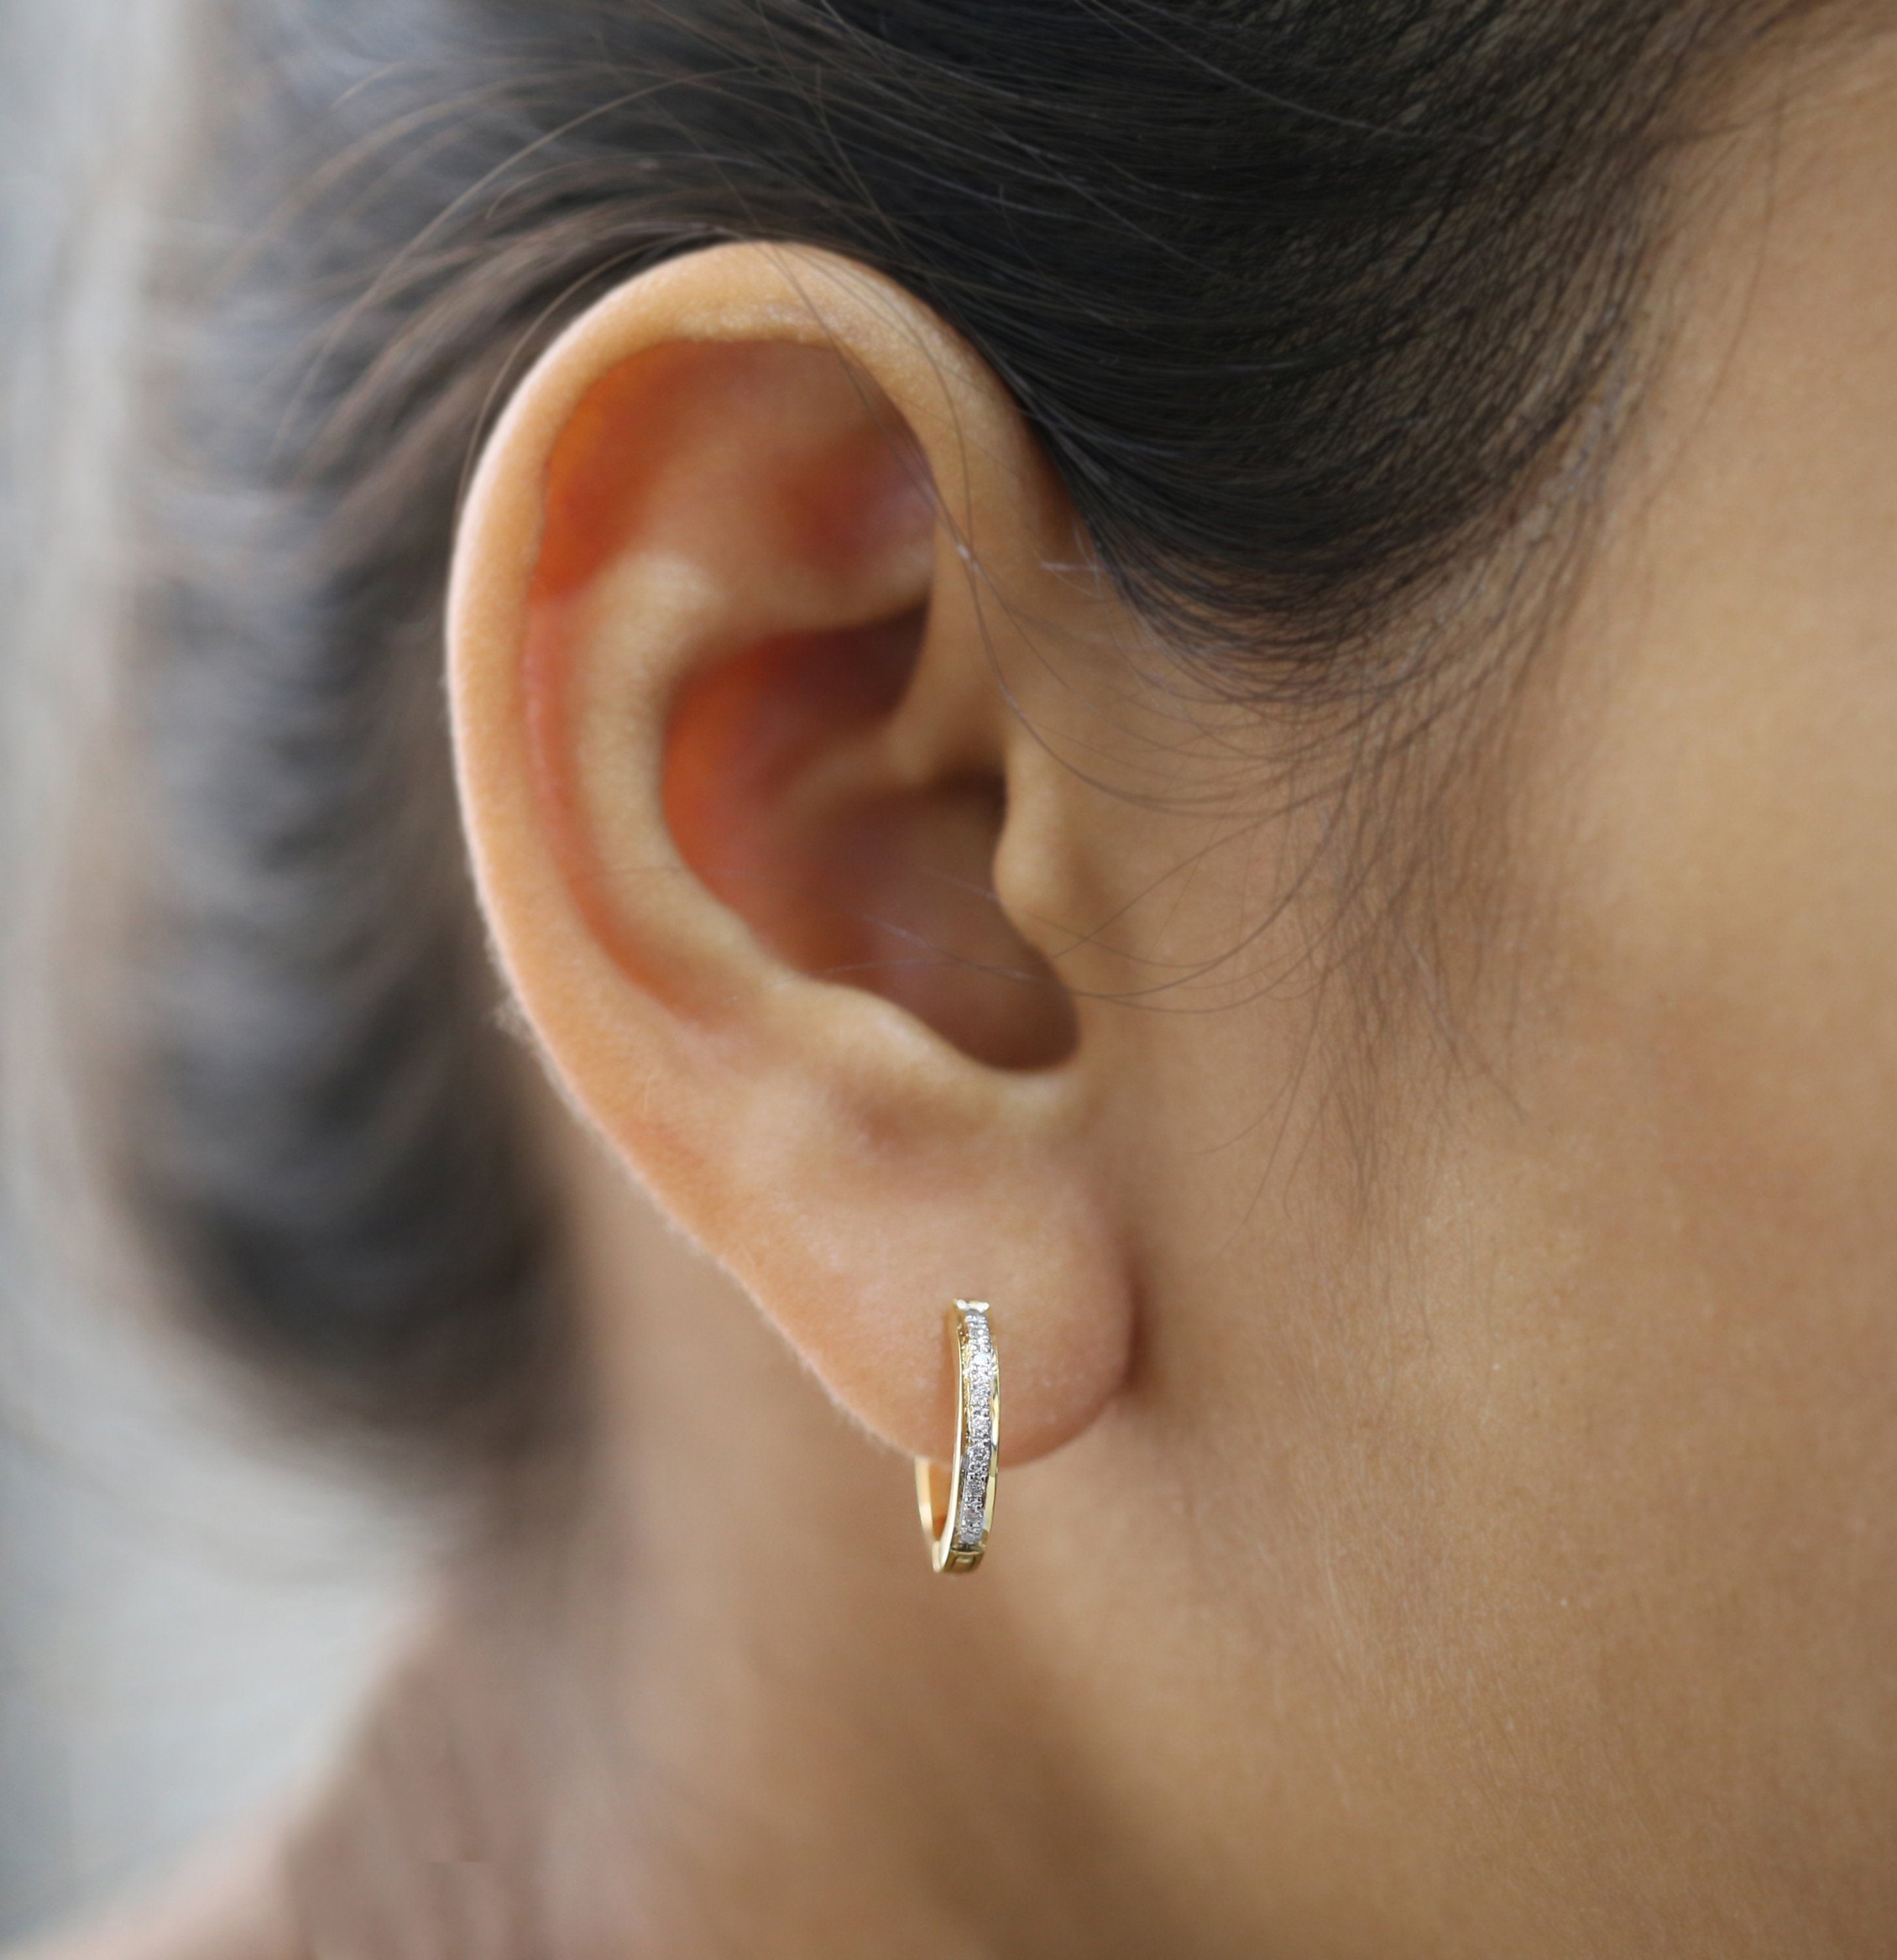 Natural White Round Diamond Earring 14K Yellow Gold Hoop Earring Valentine Gift KD900